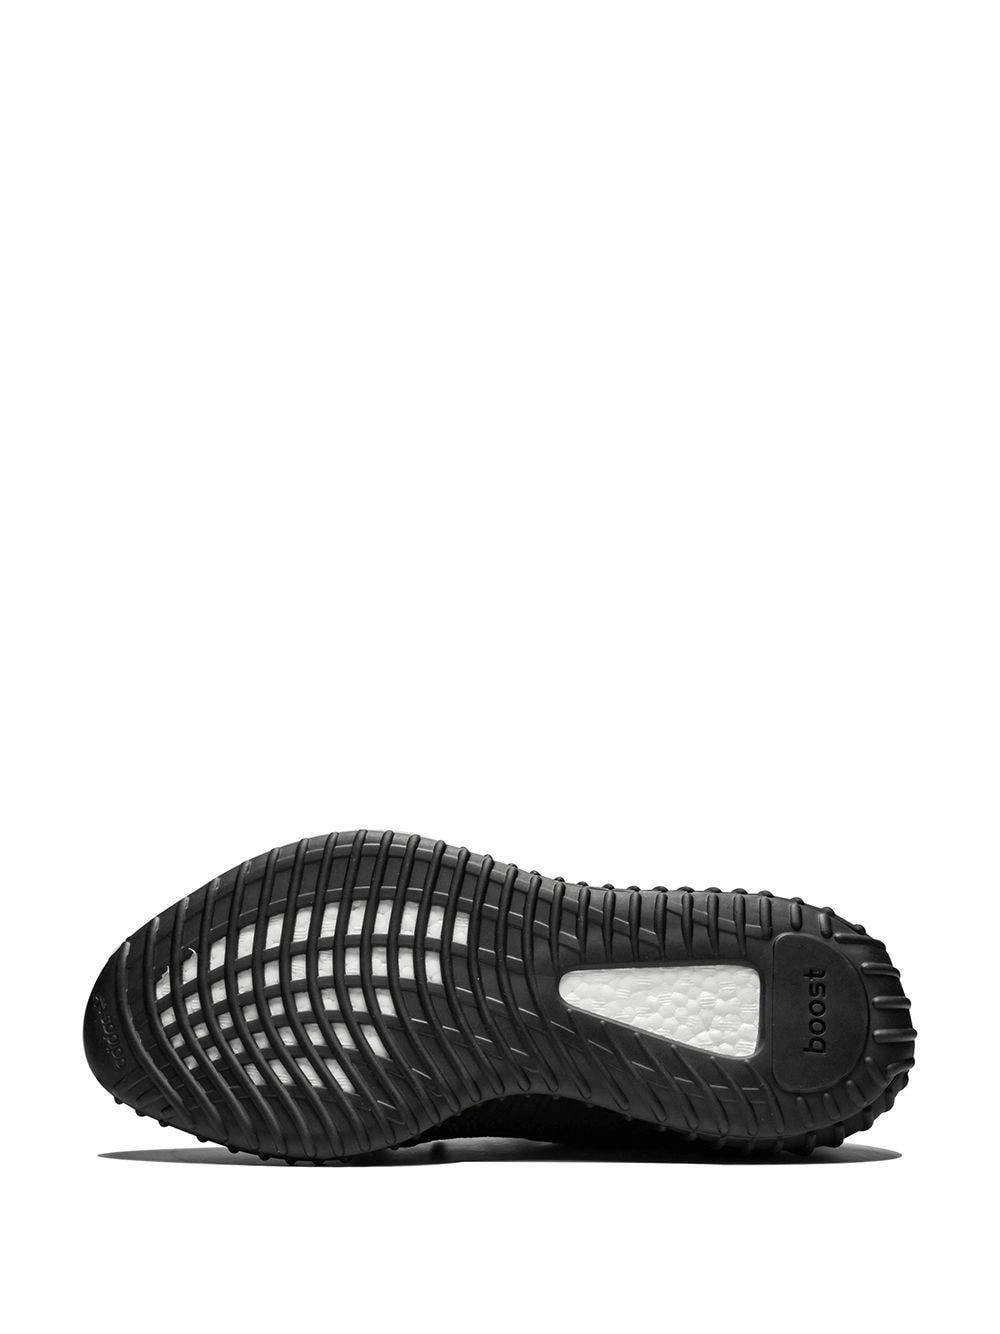 Yeezy Yeezy Boost 350 V2 "black Static" Sneakers for Men | Lyst